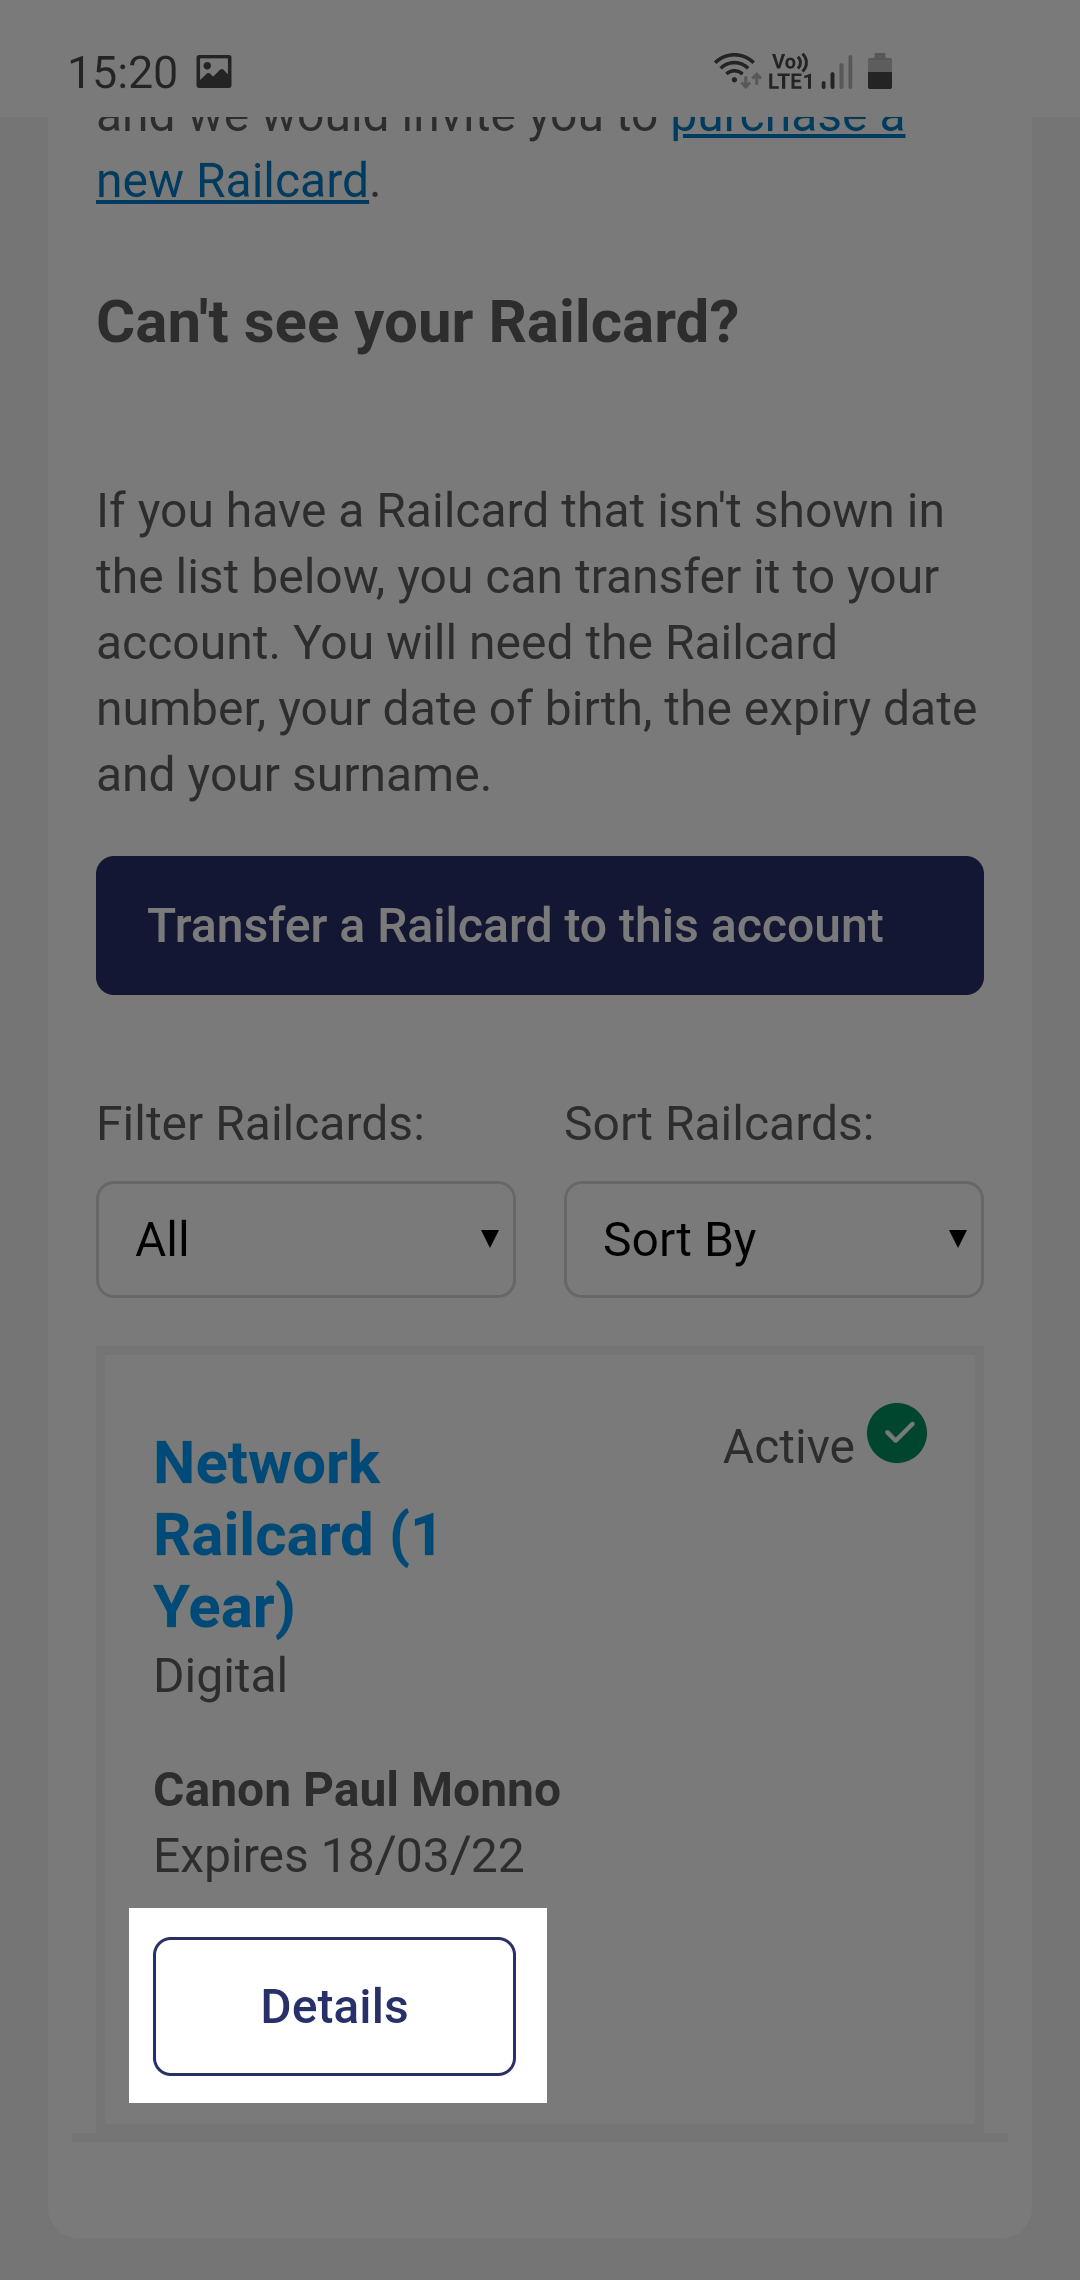 trip railcard download code